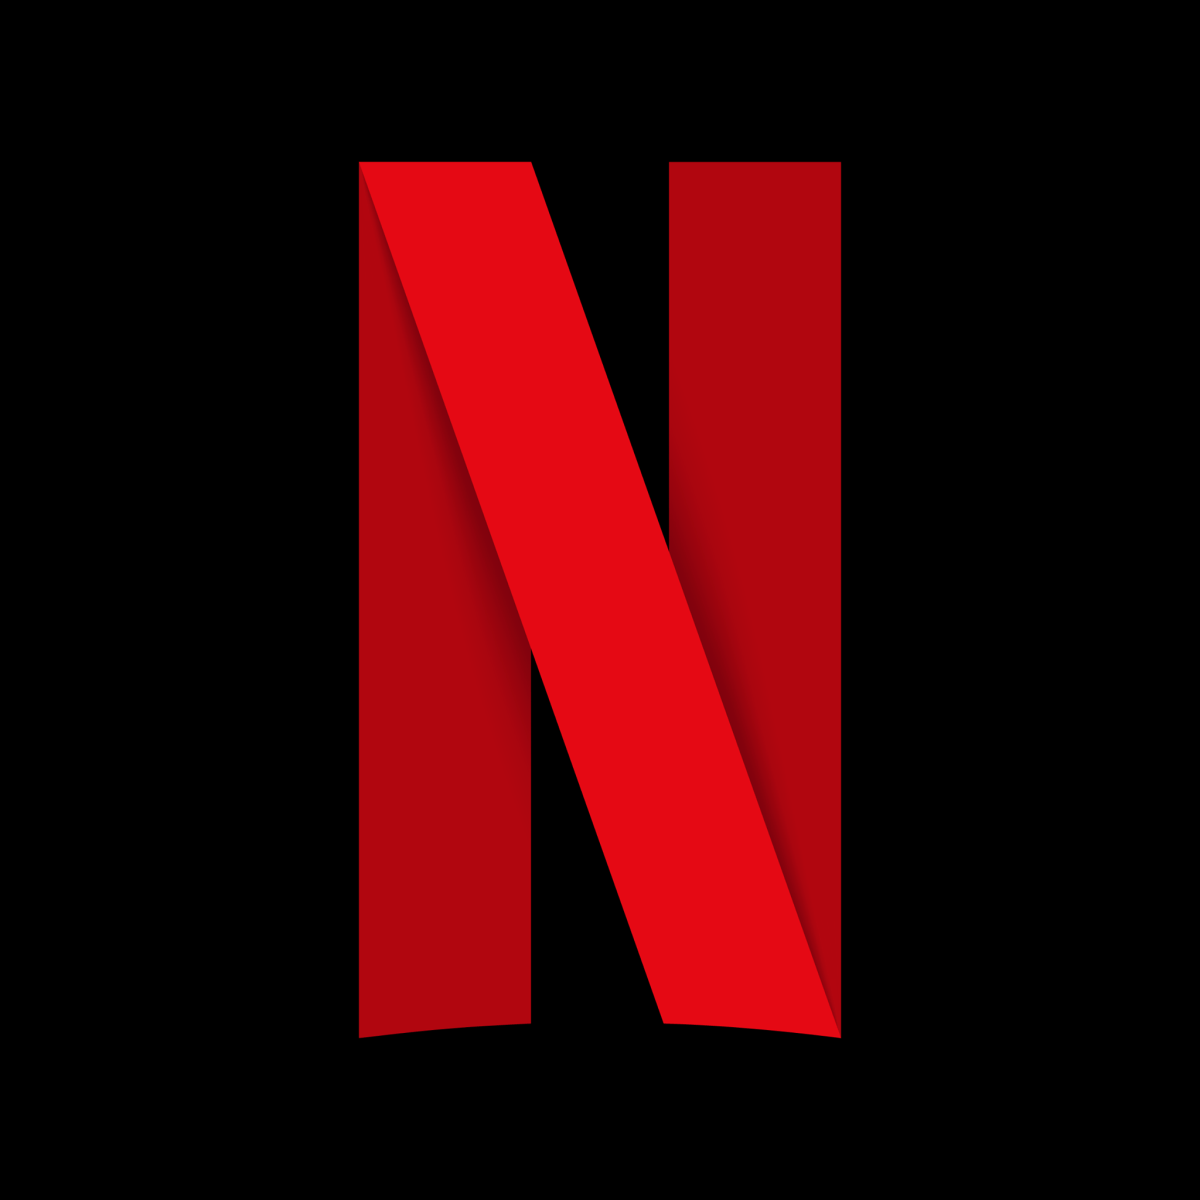 Nrtflixs Logo - Netflix made a new logo that's designed for mobile devices